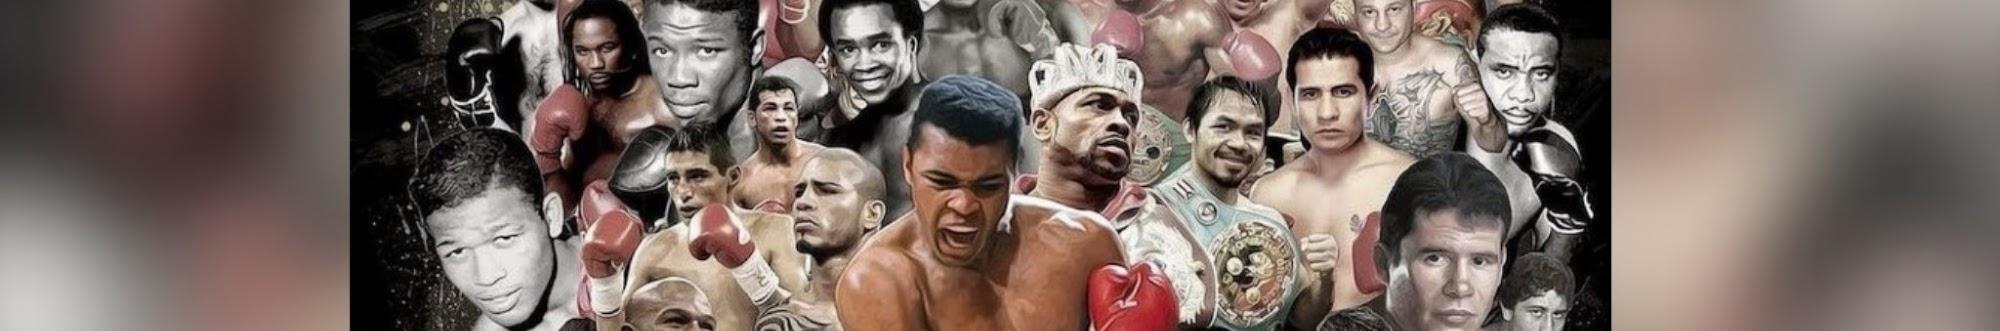 Kingdom of Boxing